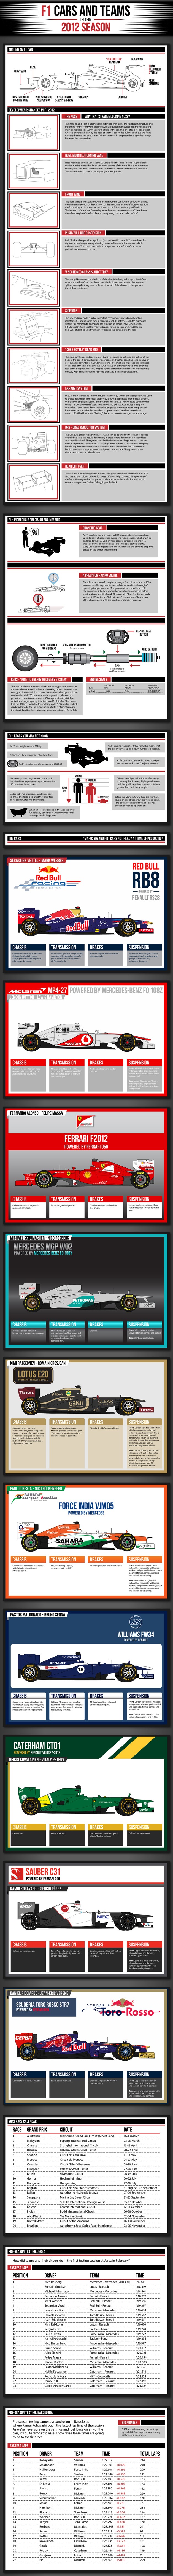 F1 Infographic